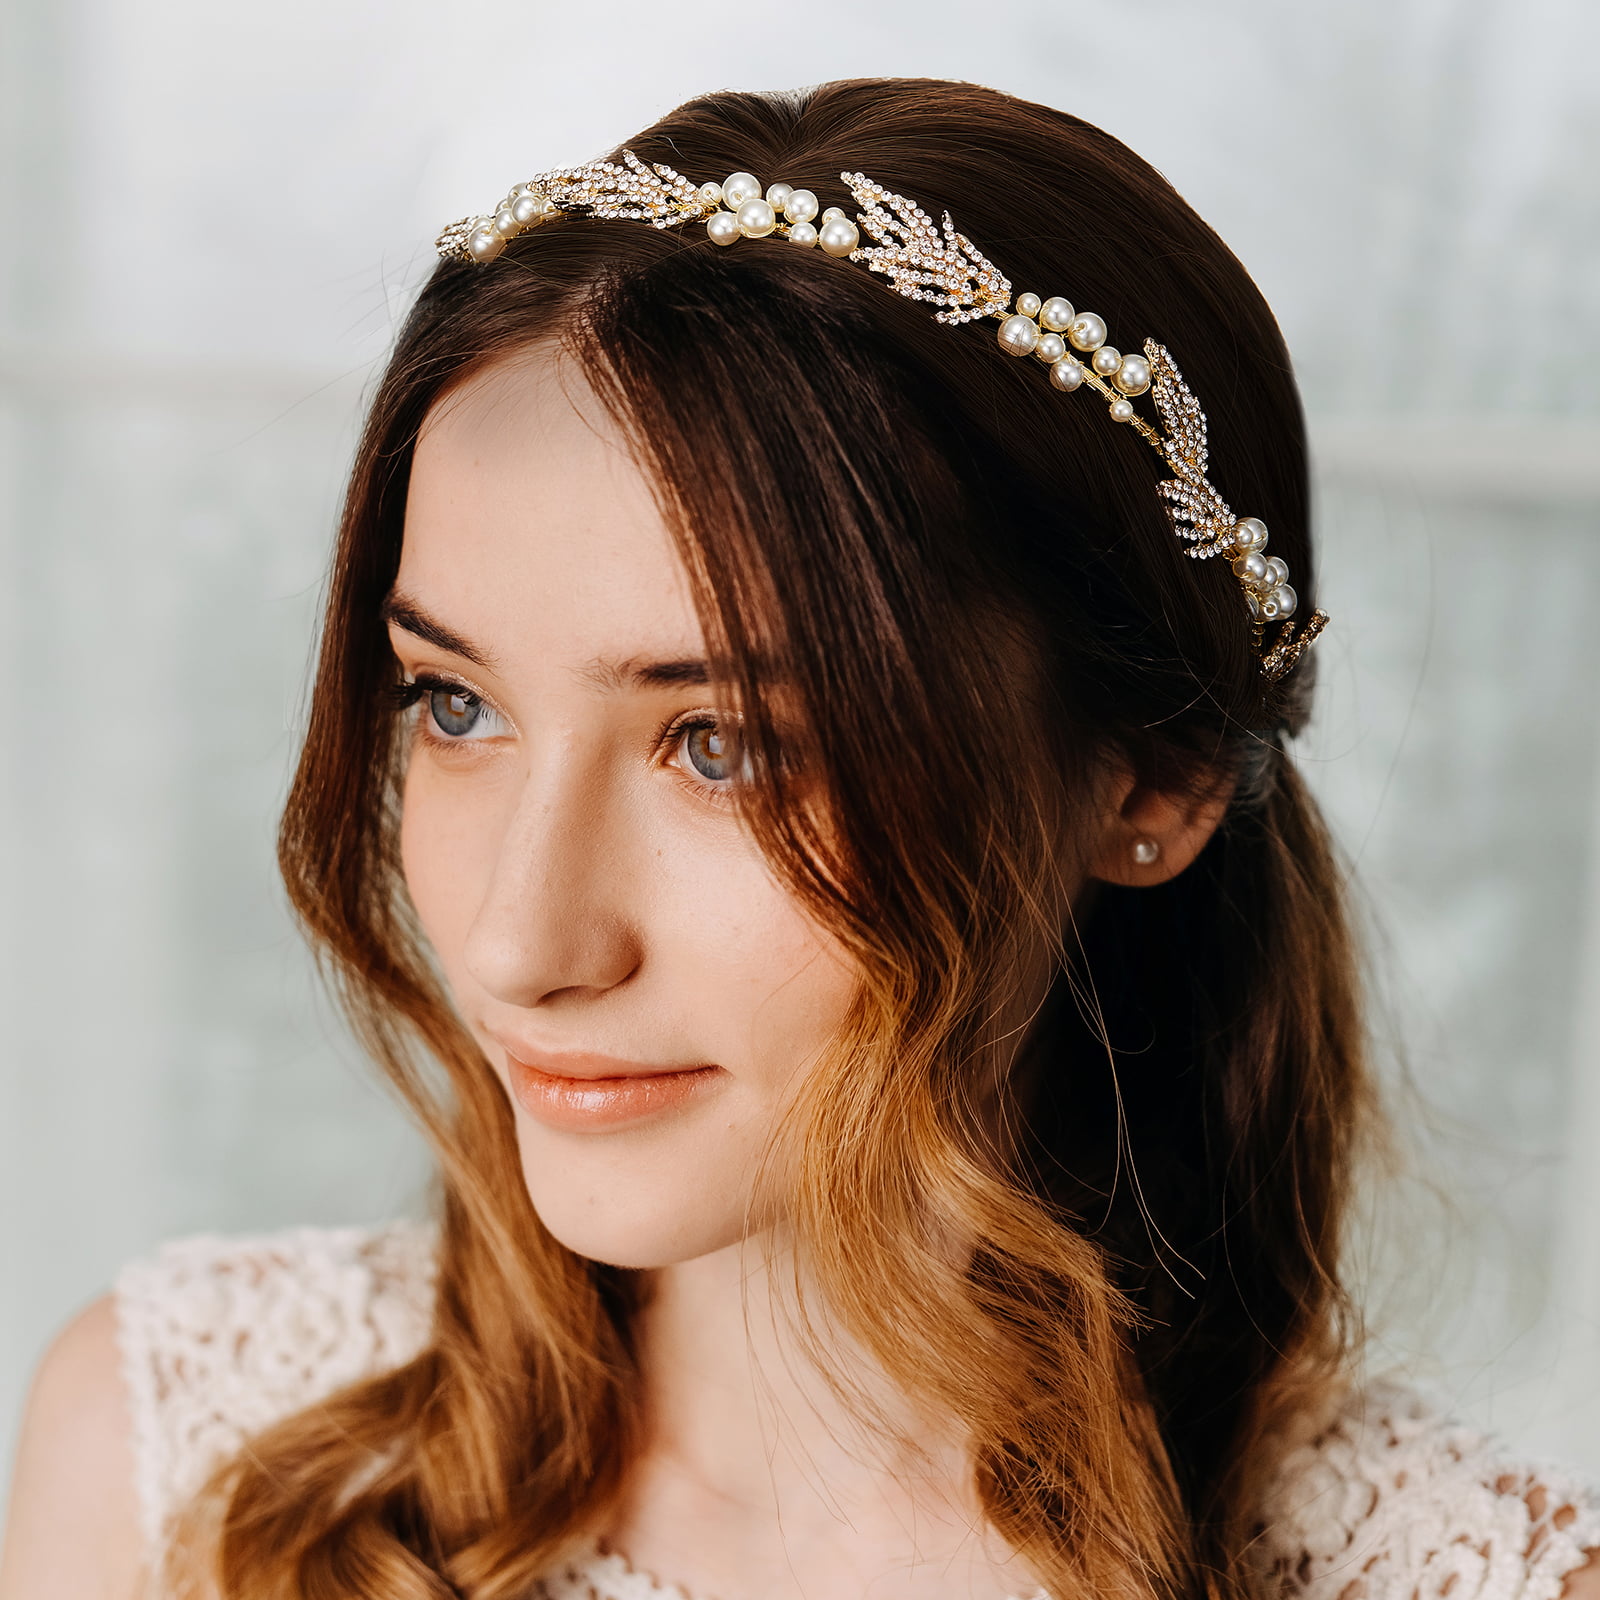 Central Chic Romantic Pearl Crystal Rhinestone Headband Leaf Tiara Wedding Hair Jewelry Accessories for Women